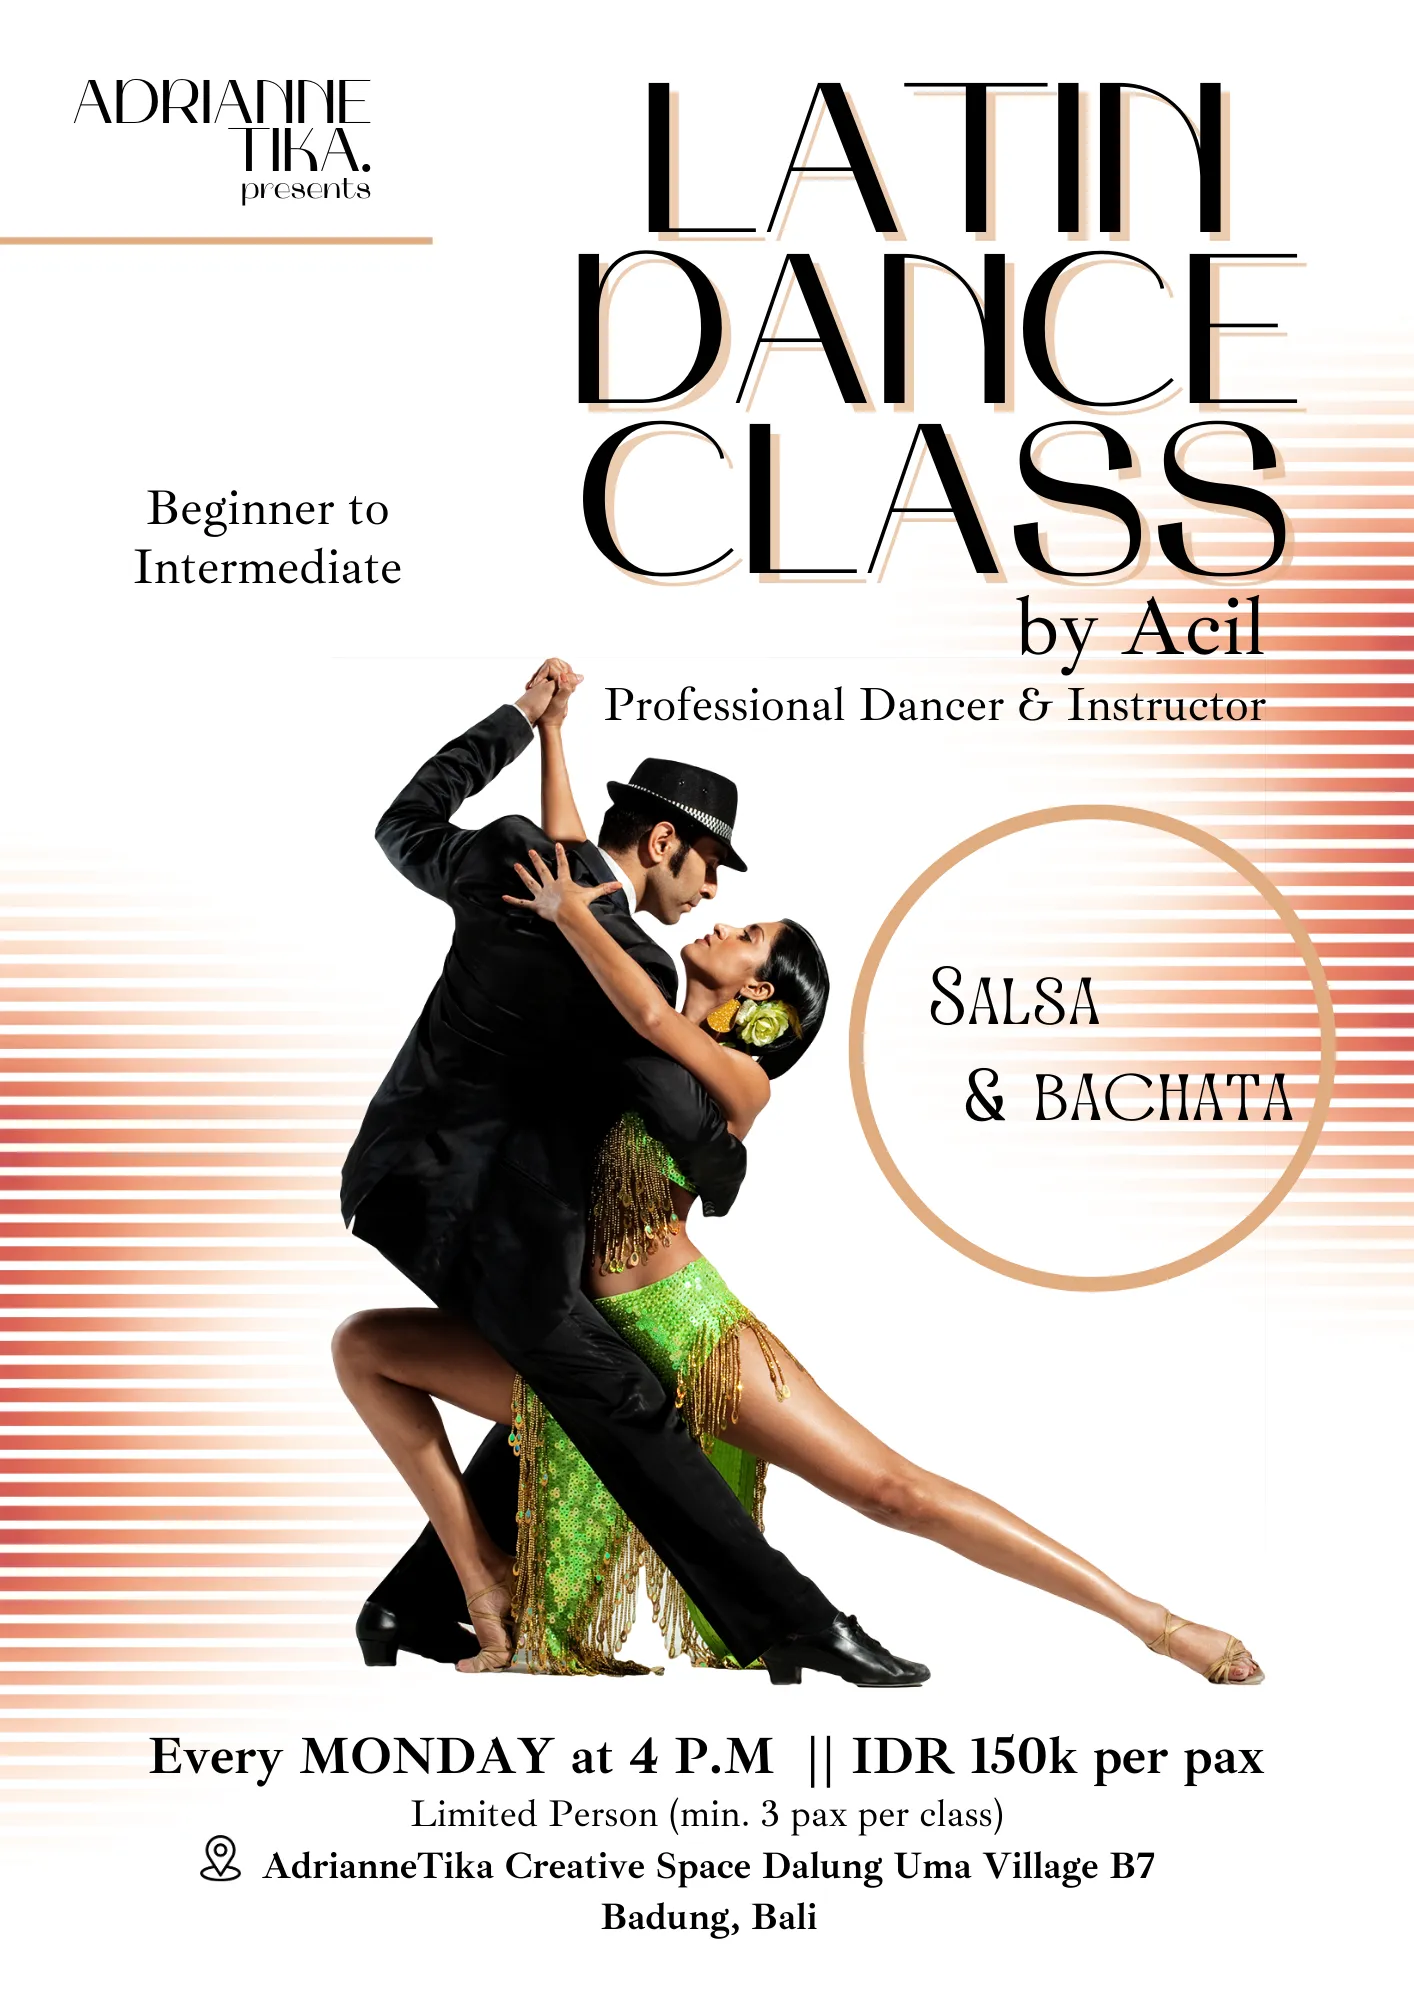 Dancing Latin Dance Class 6568